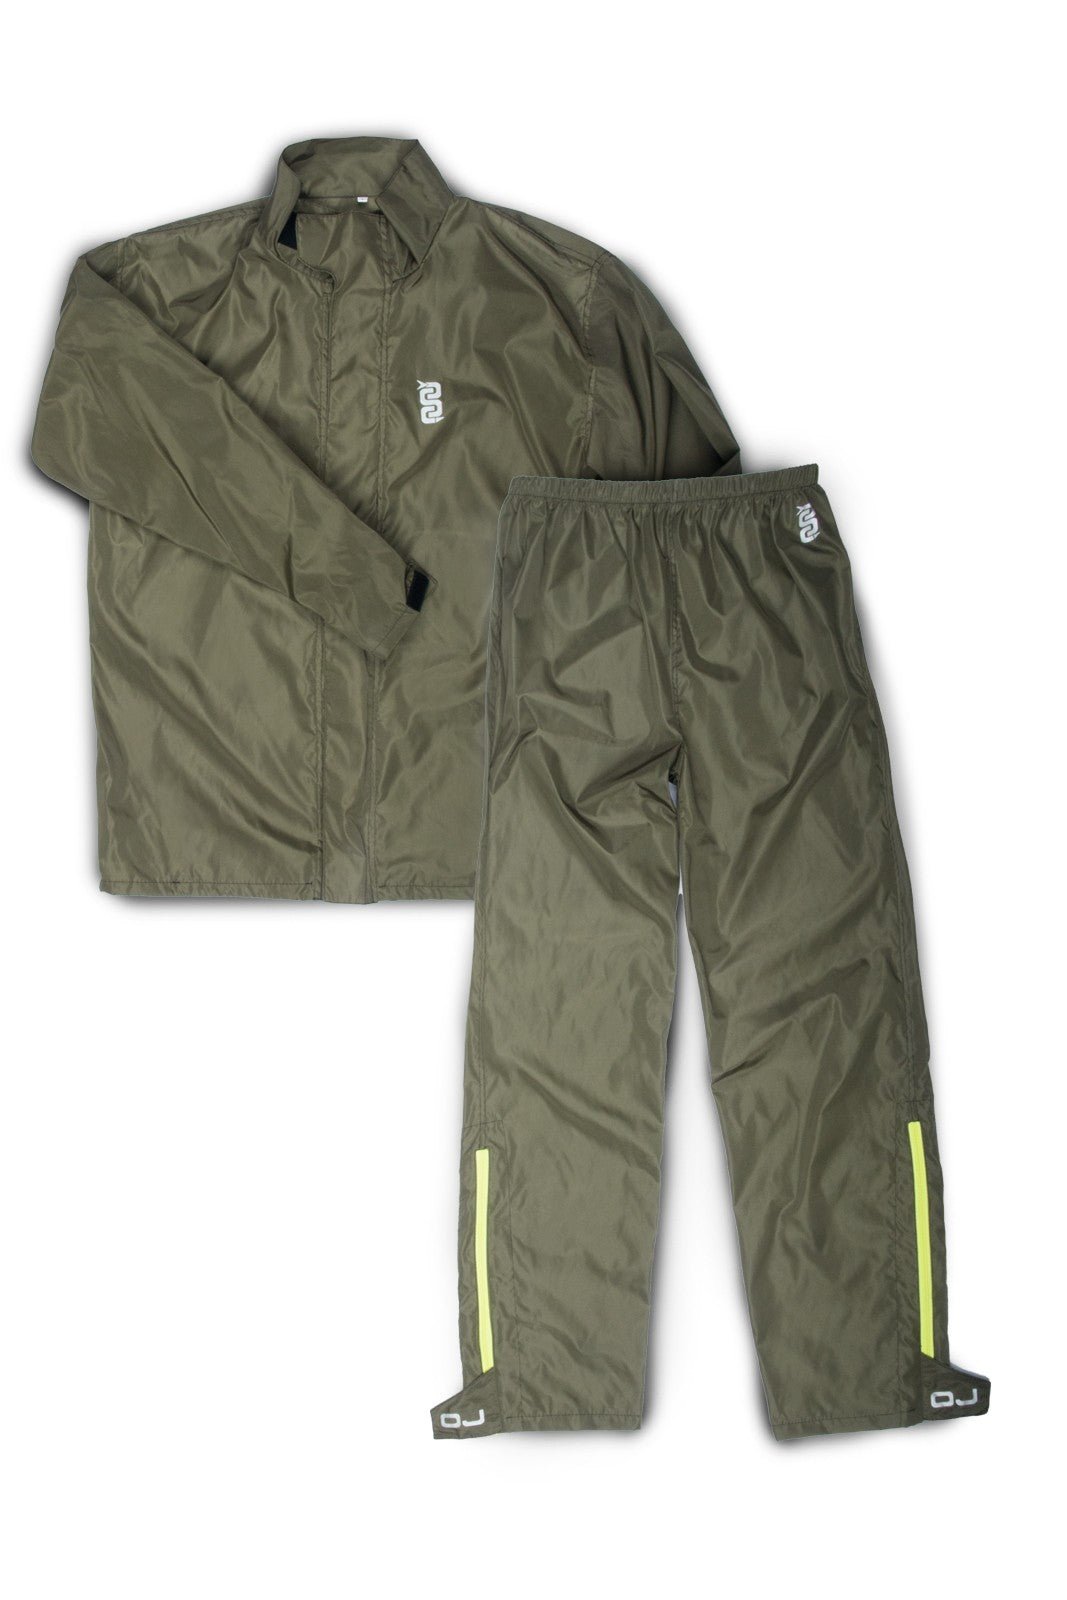 Antipioggia moto OJ SYSTEM SET VERDE leggero e compatto giacca e pantaloni - OnTheRoad.shop - OJ